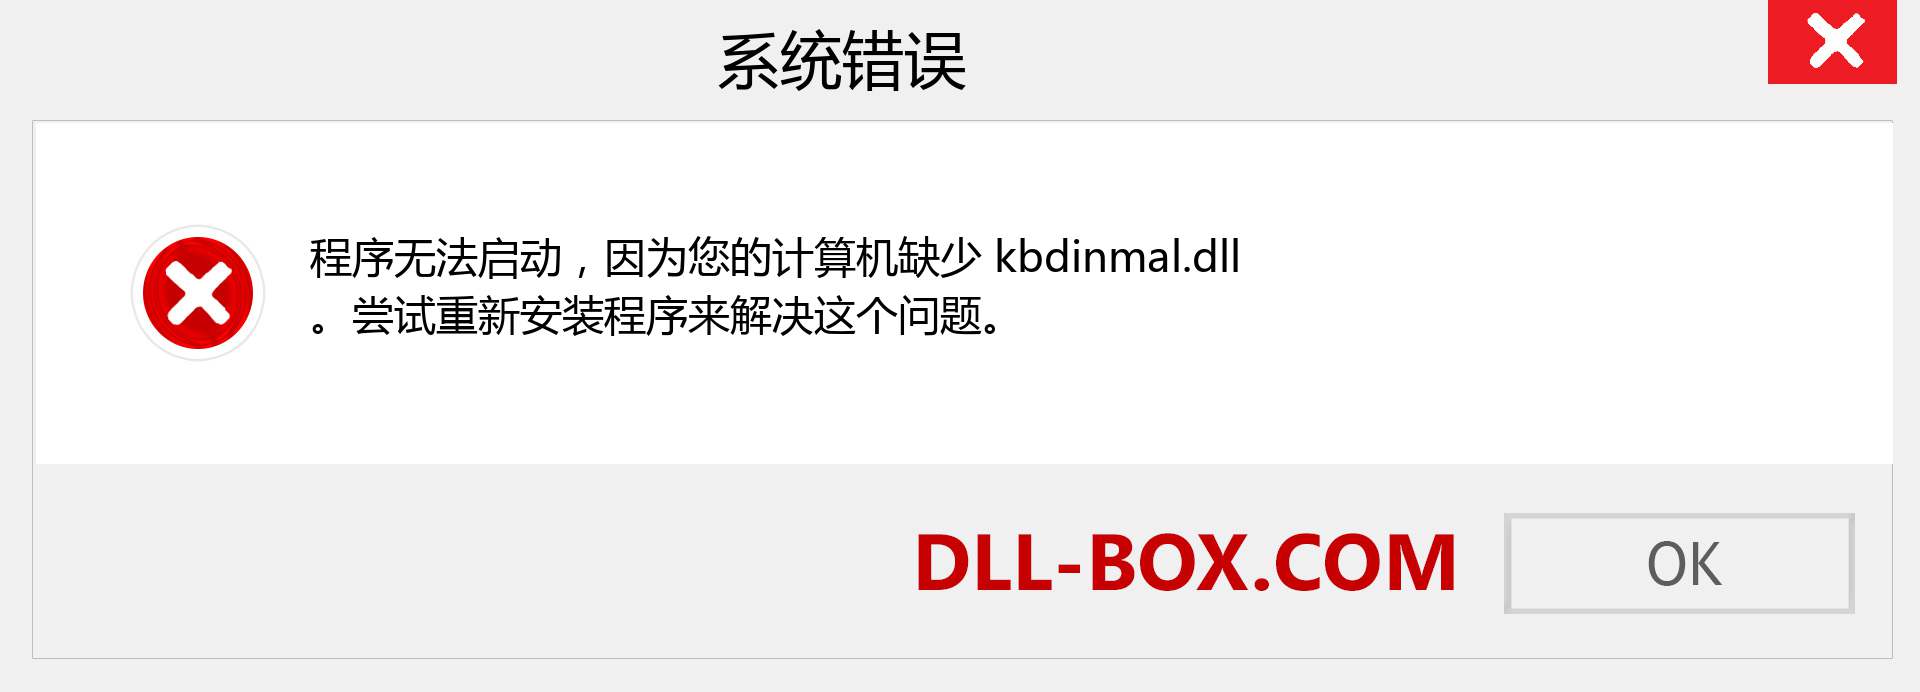 kbdinmal.dll 文件丢失？。 适用于 Windows 7、8、10 的下载 - 修复 Windows、照片、图像上的 kbdinmal dll 丢失错误